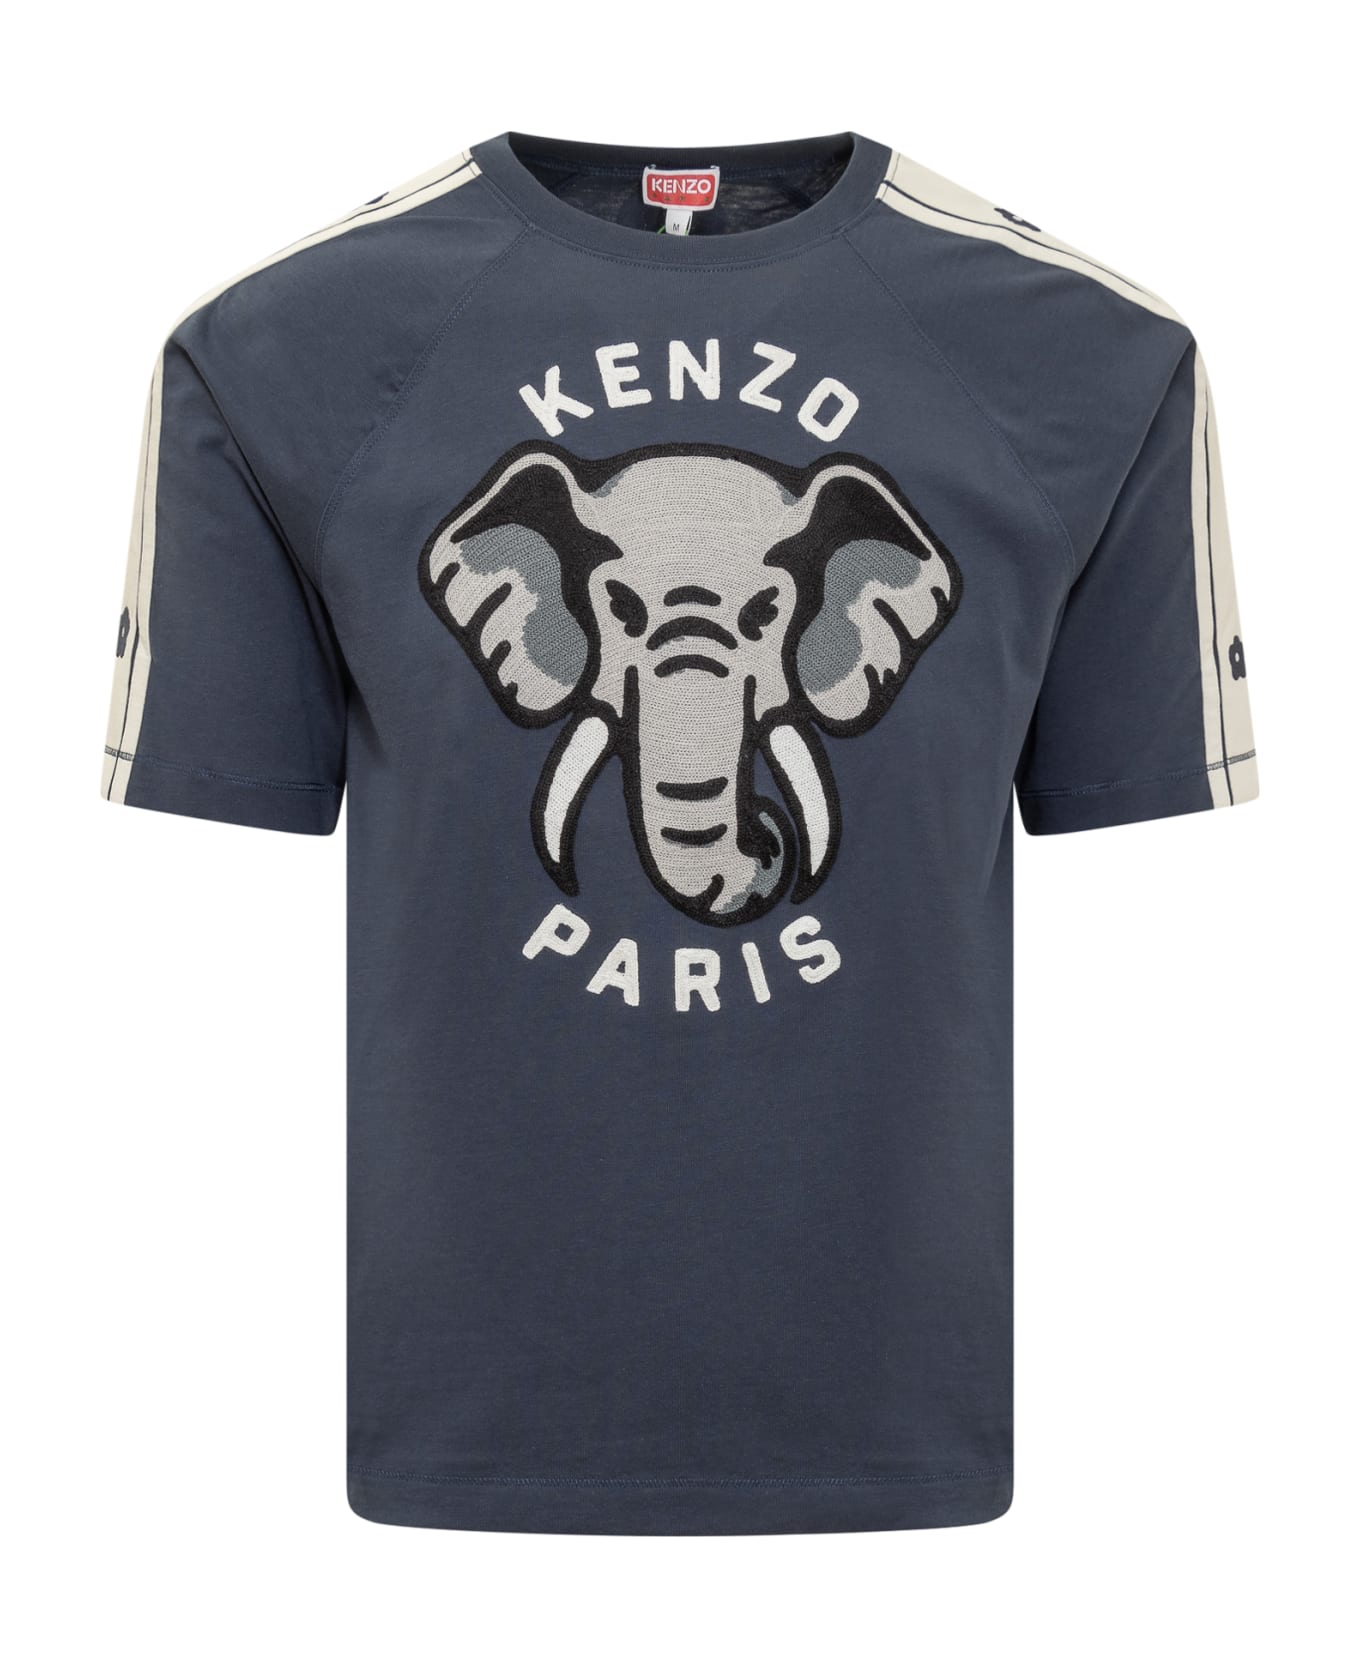 Kenzo 'ken Zo Slim' Cotton T-shirt - Blue シャツ